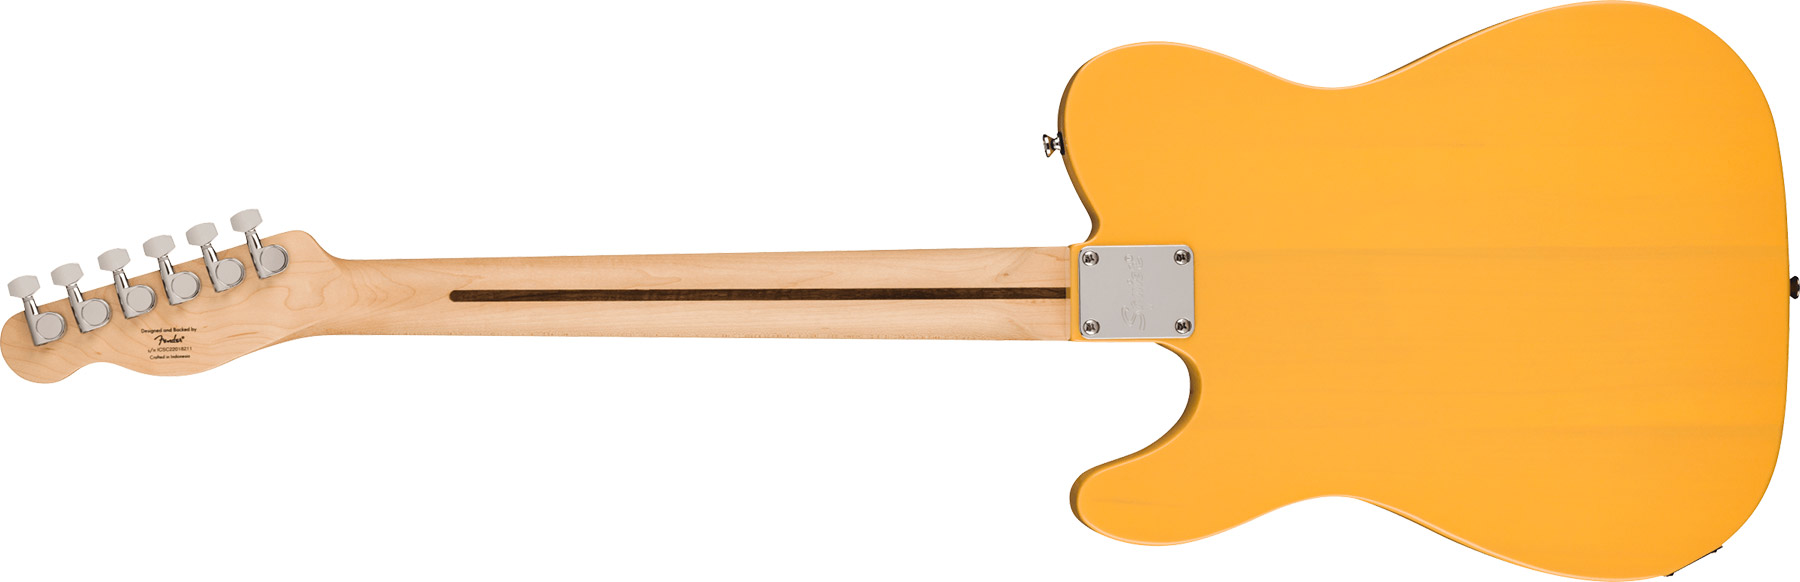 Squier Tele Sonic 2s Ht Mn - Butterscotch Blonde - Tel shape electric guitar - Variation 1